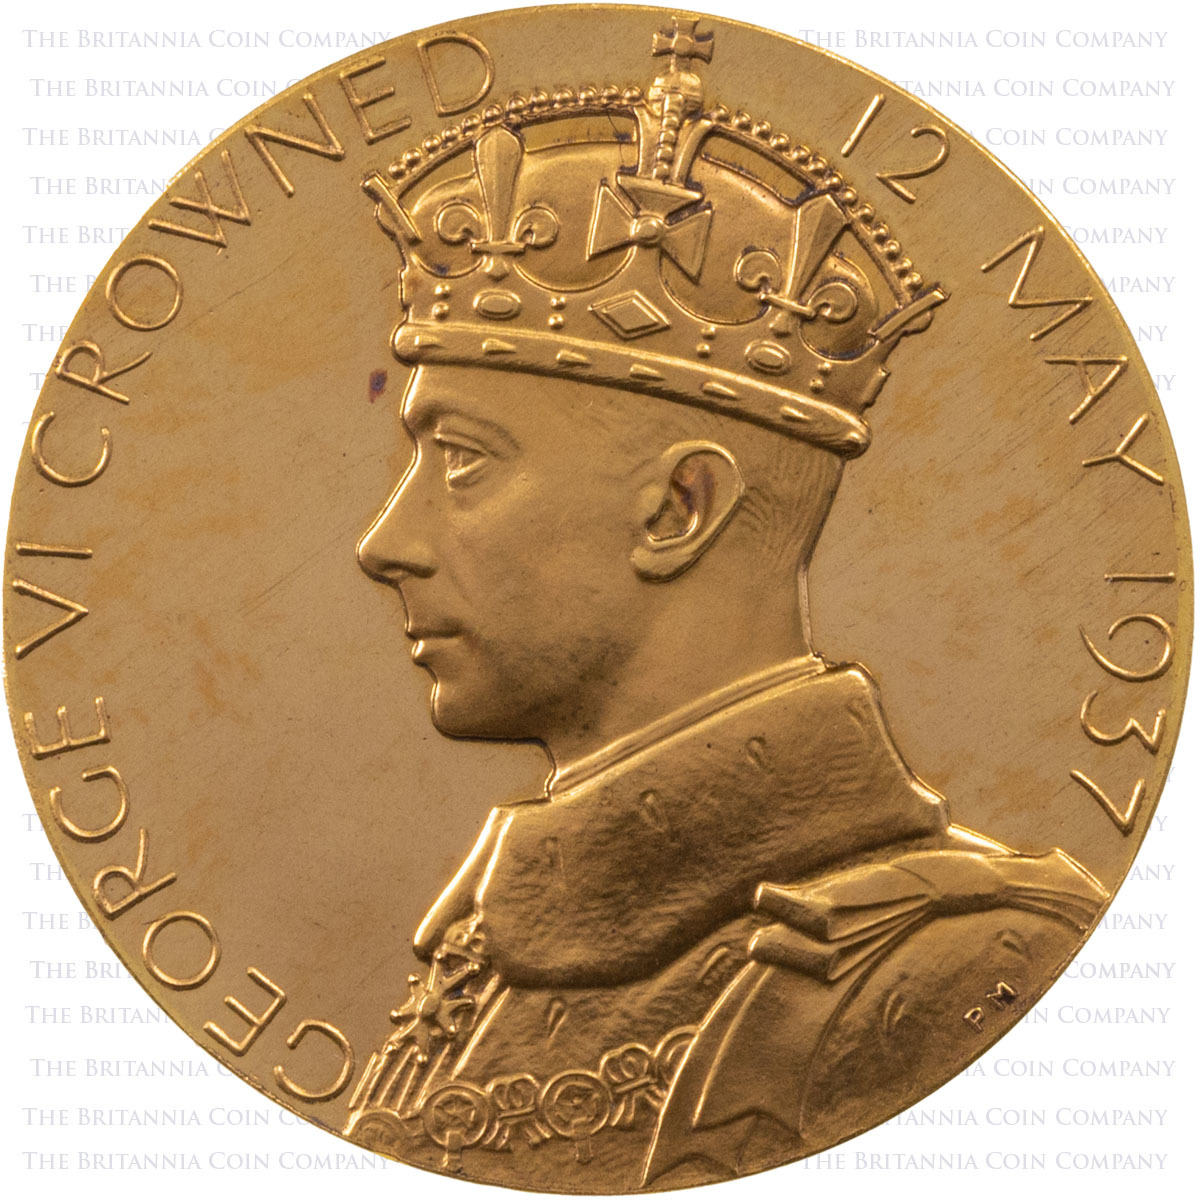 MD72 1937 King George VI Gold Royal Mint Coronation Medal Obverse